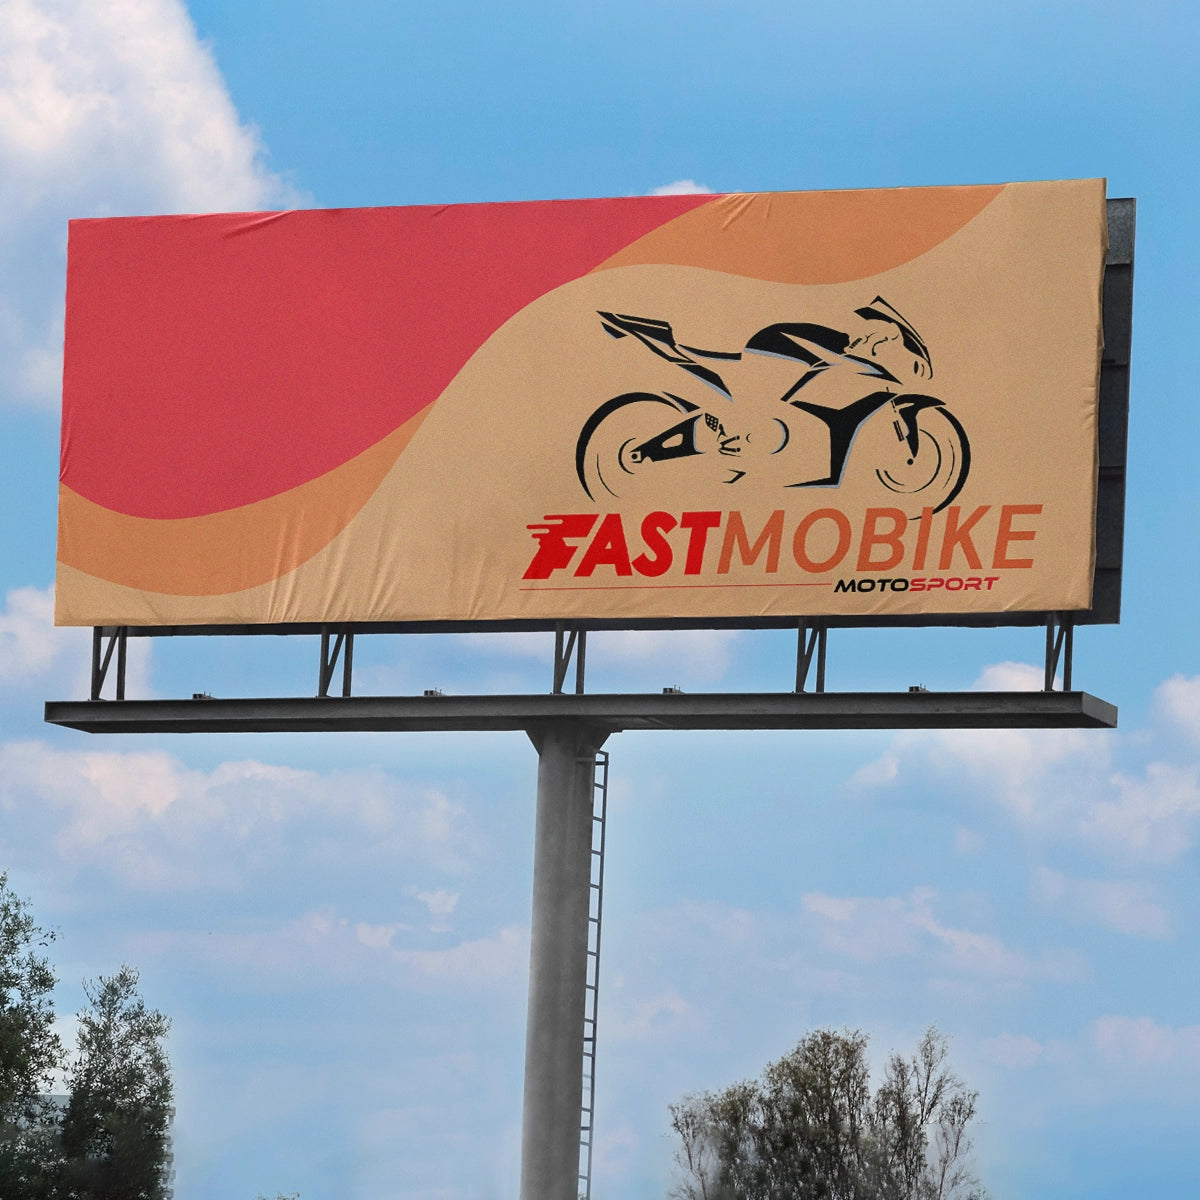 fastmobike.com